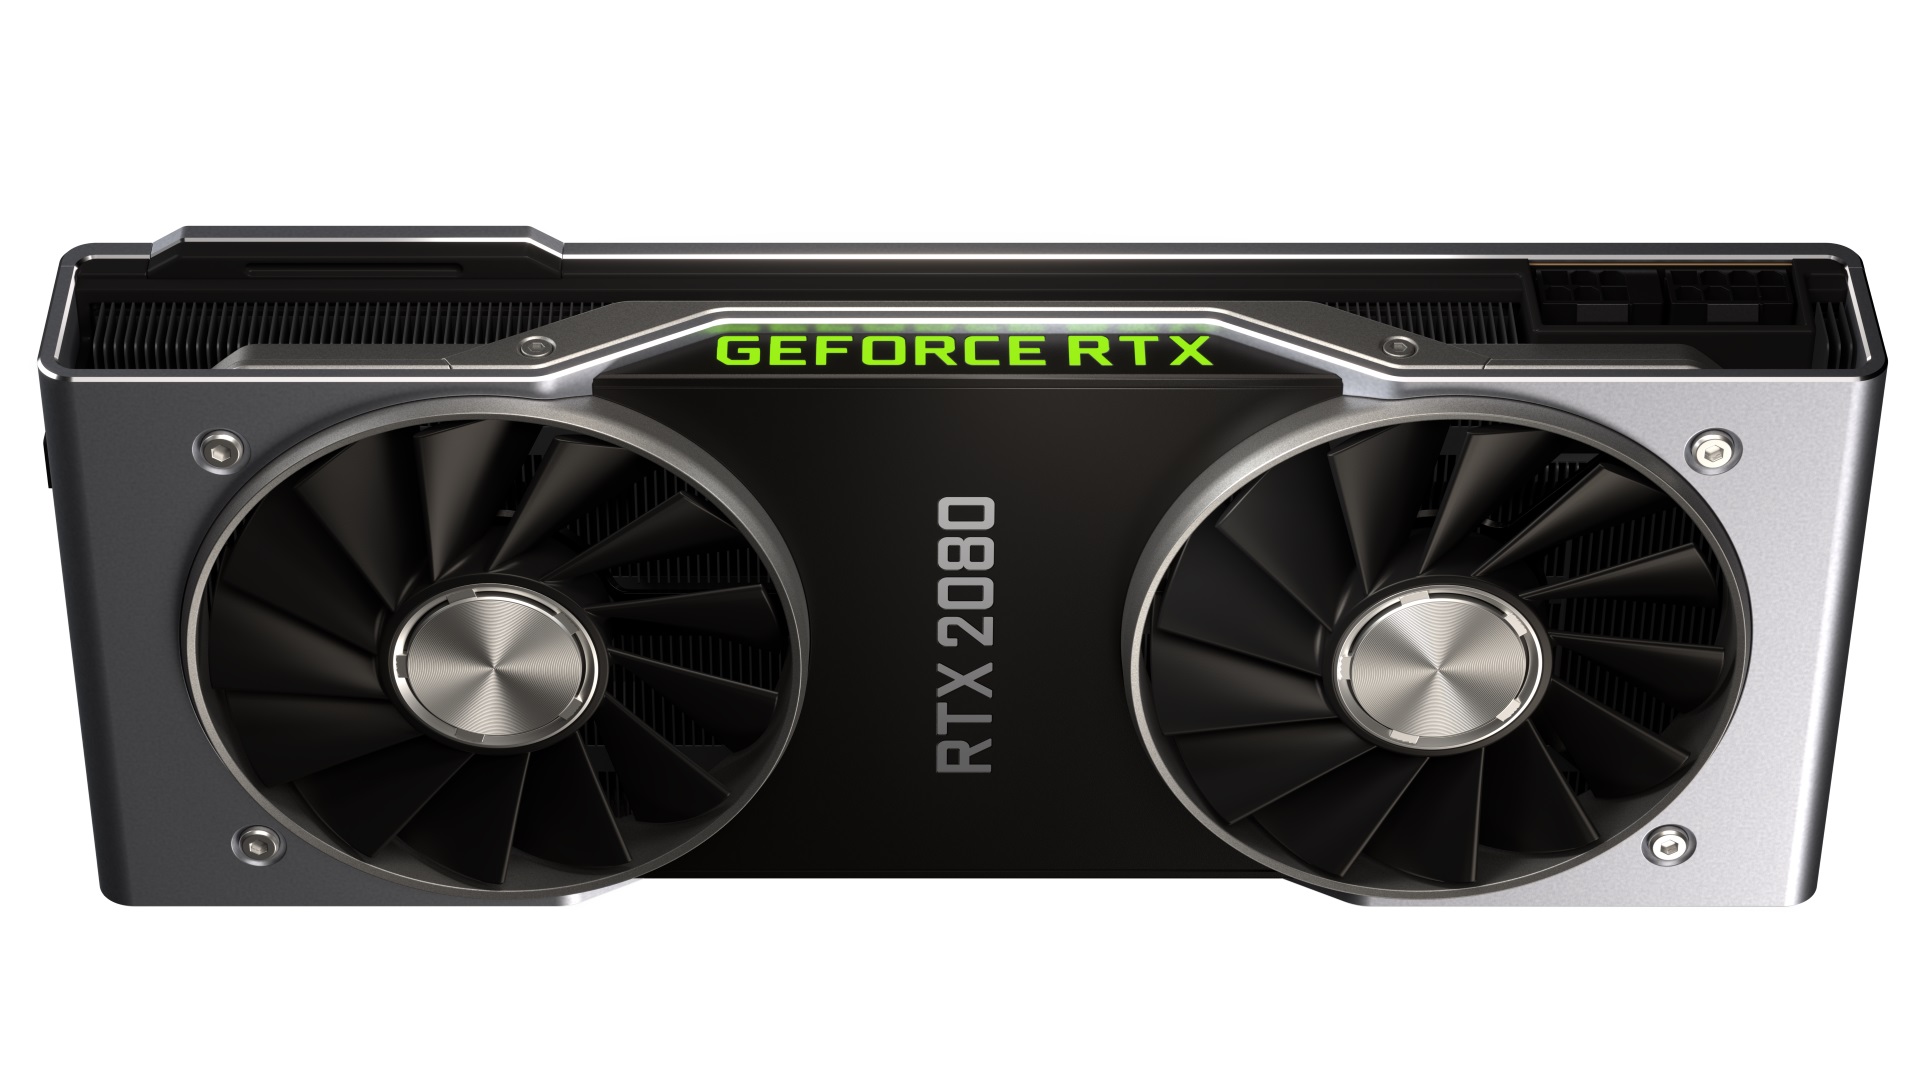 NVIDIA GeForce RTX 2080 Specs